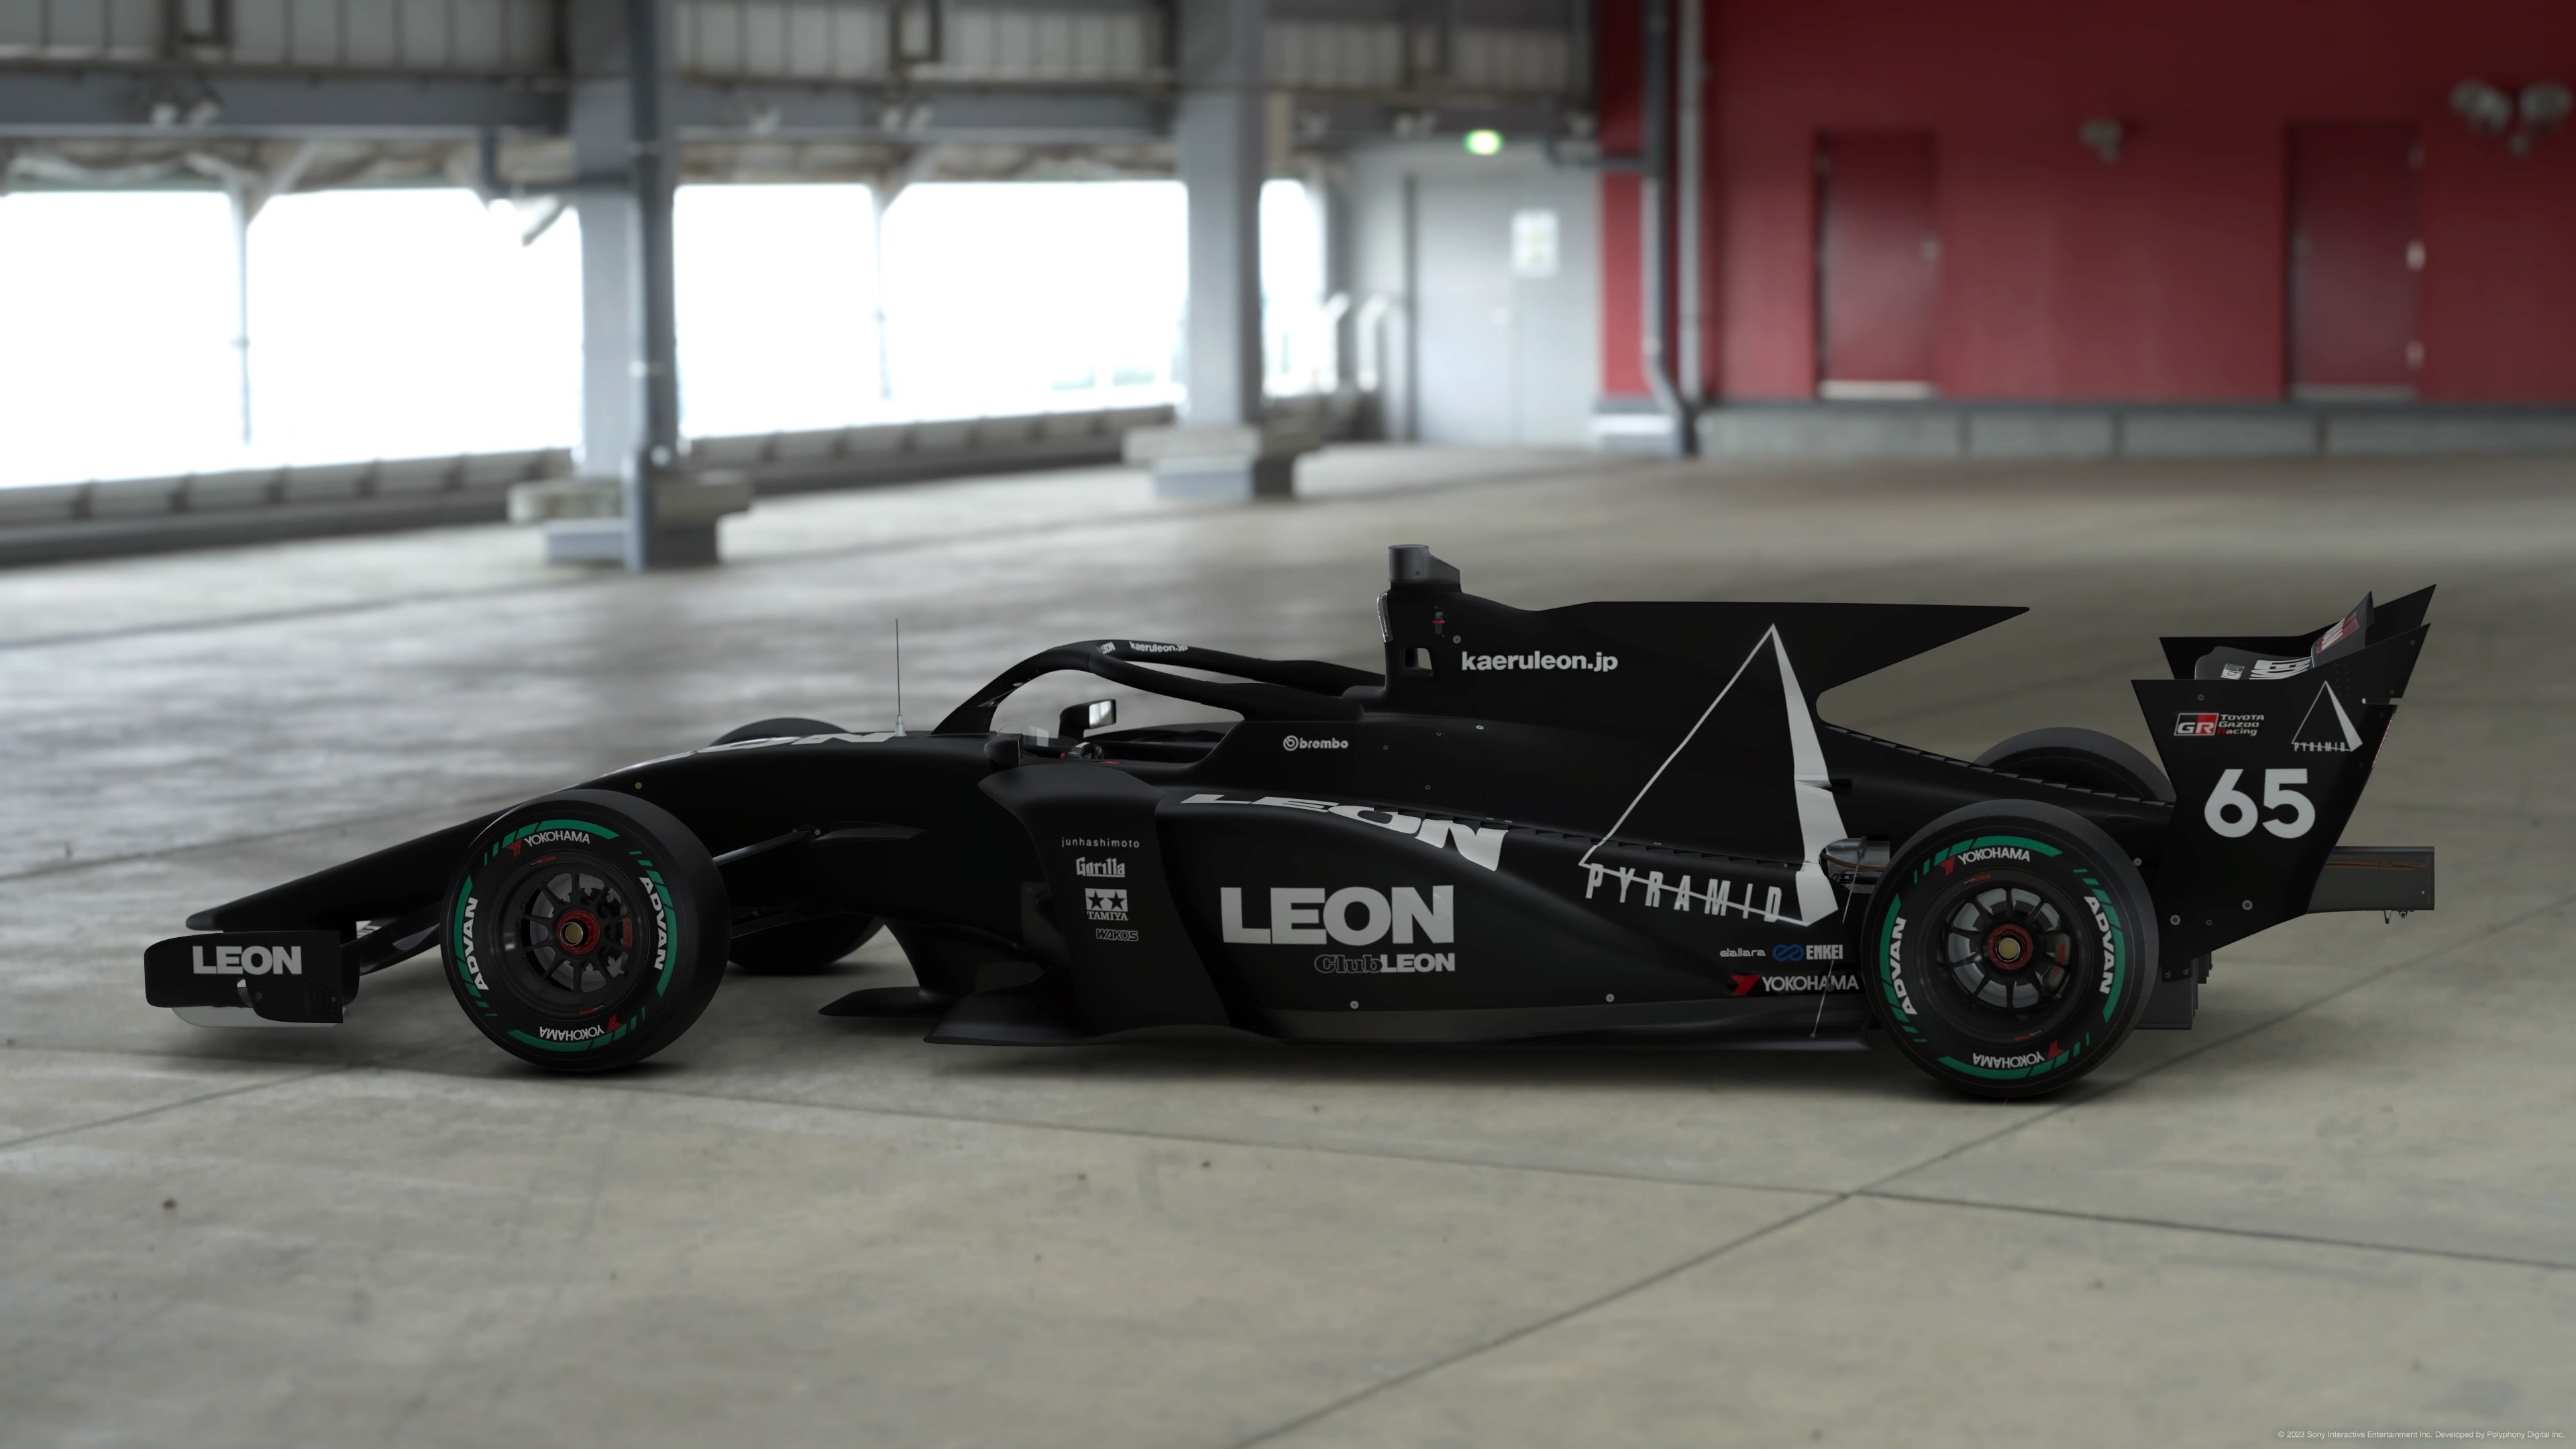 Leon Super Formula Toyota 1